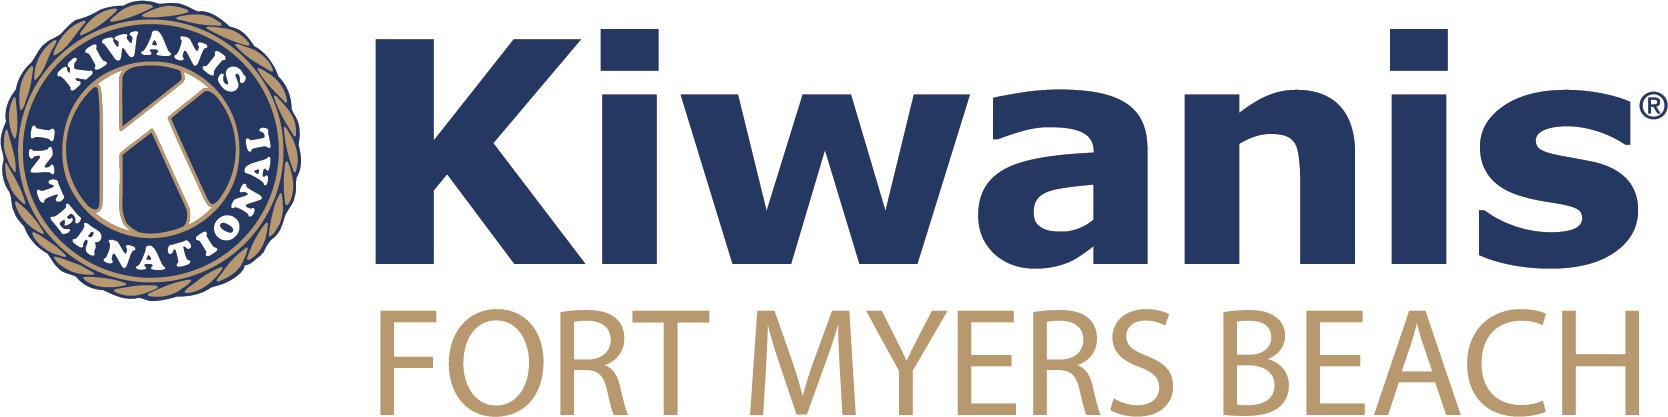 Kiwanis Fort Myers Beach logo